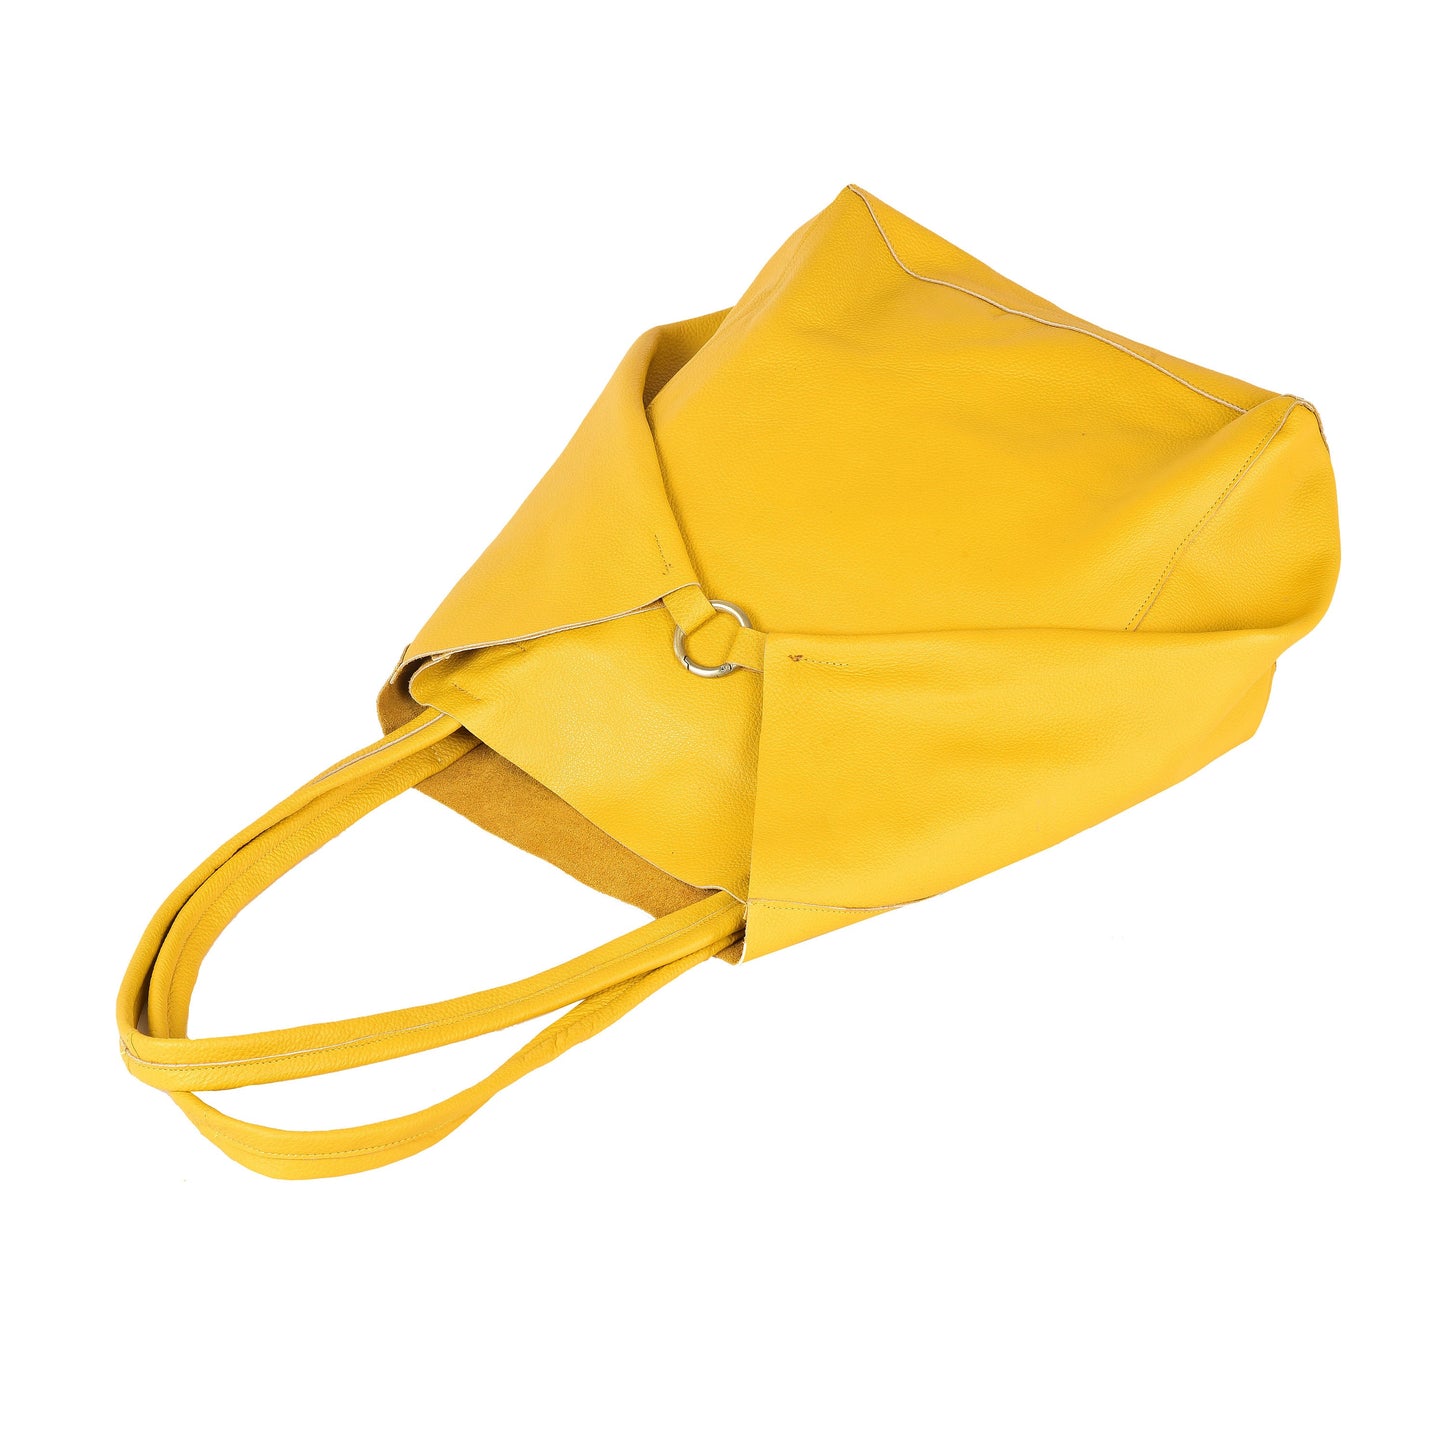 Yellow Oversize Leather Shopper Bag With Cosmetic bag Large Leather Tote Bag Big Shoulder Bag Large Travel Bag Shopping Bag Valentines Gift